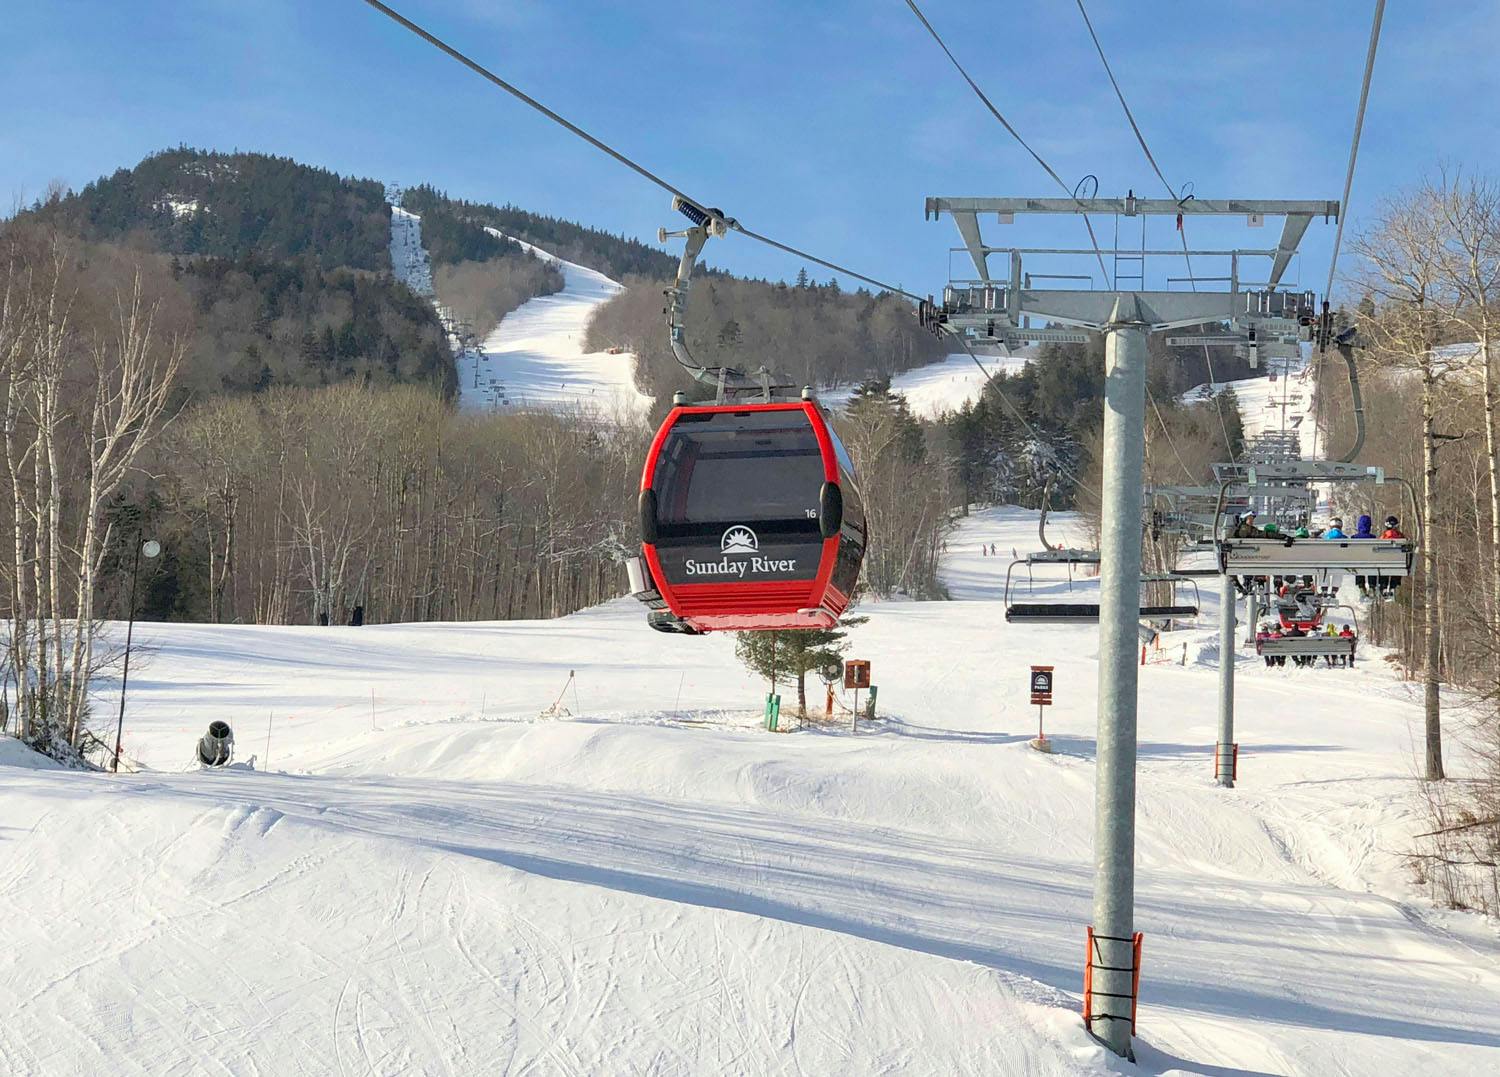 A gondola on a ski resort that reads "Sunday River".